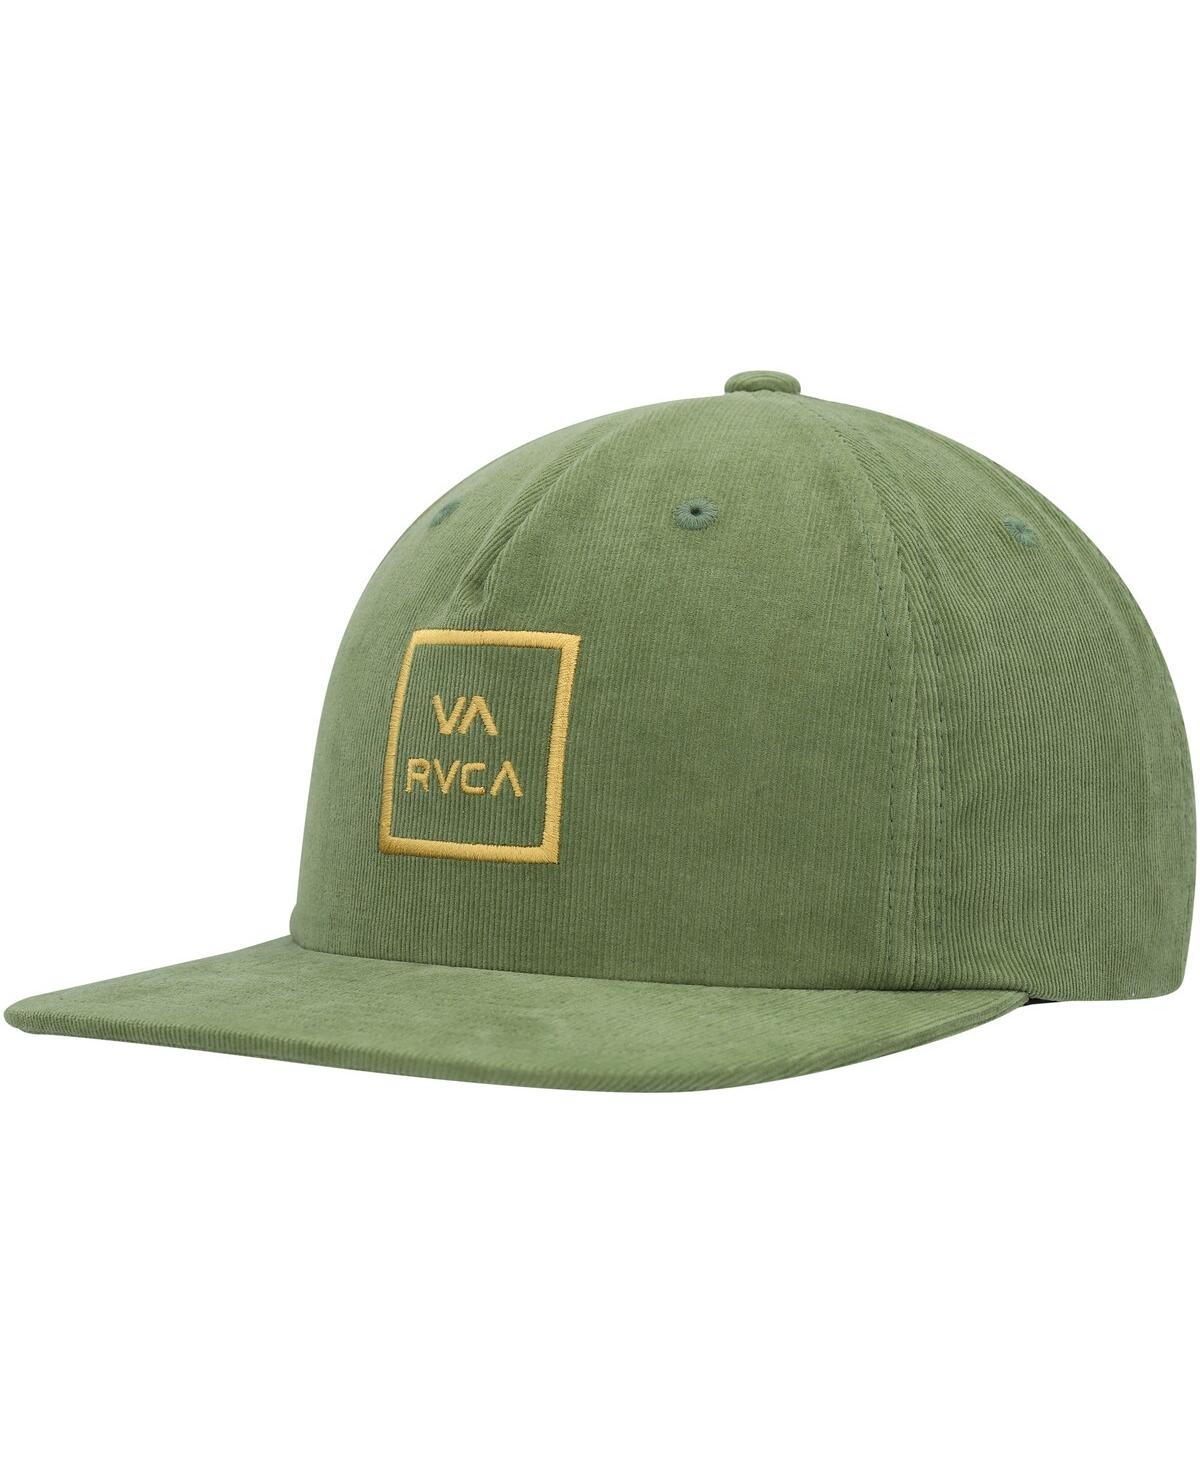 Rvca Men's  Green Freeman Snapback Hat